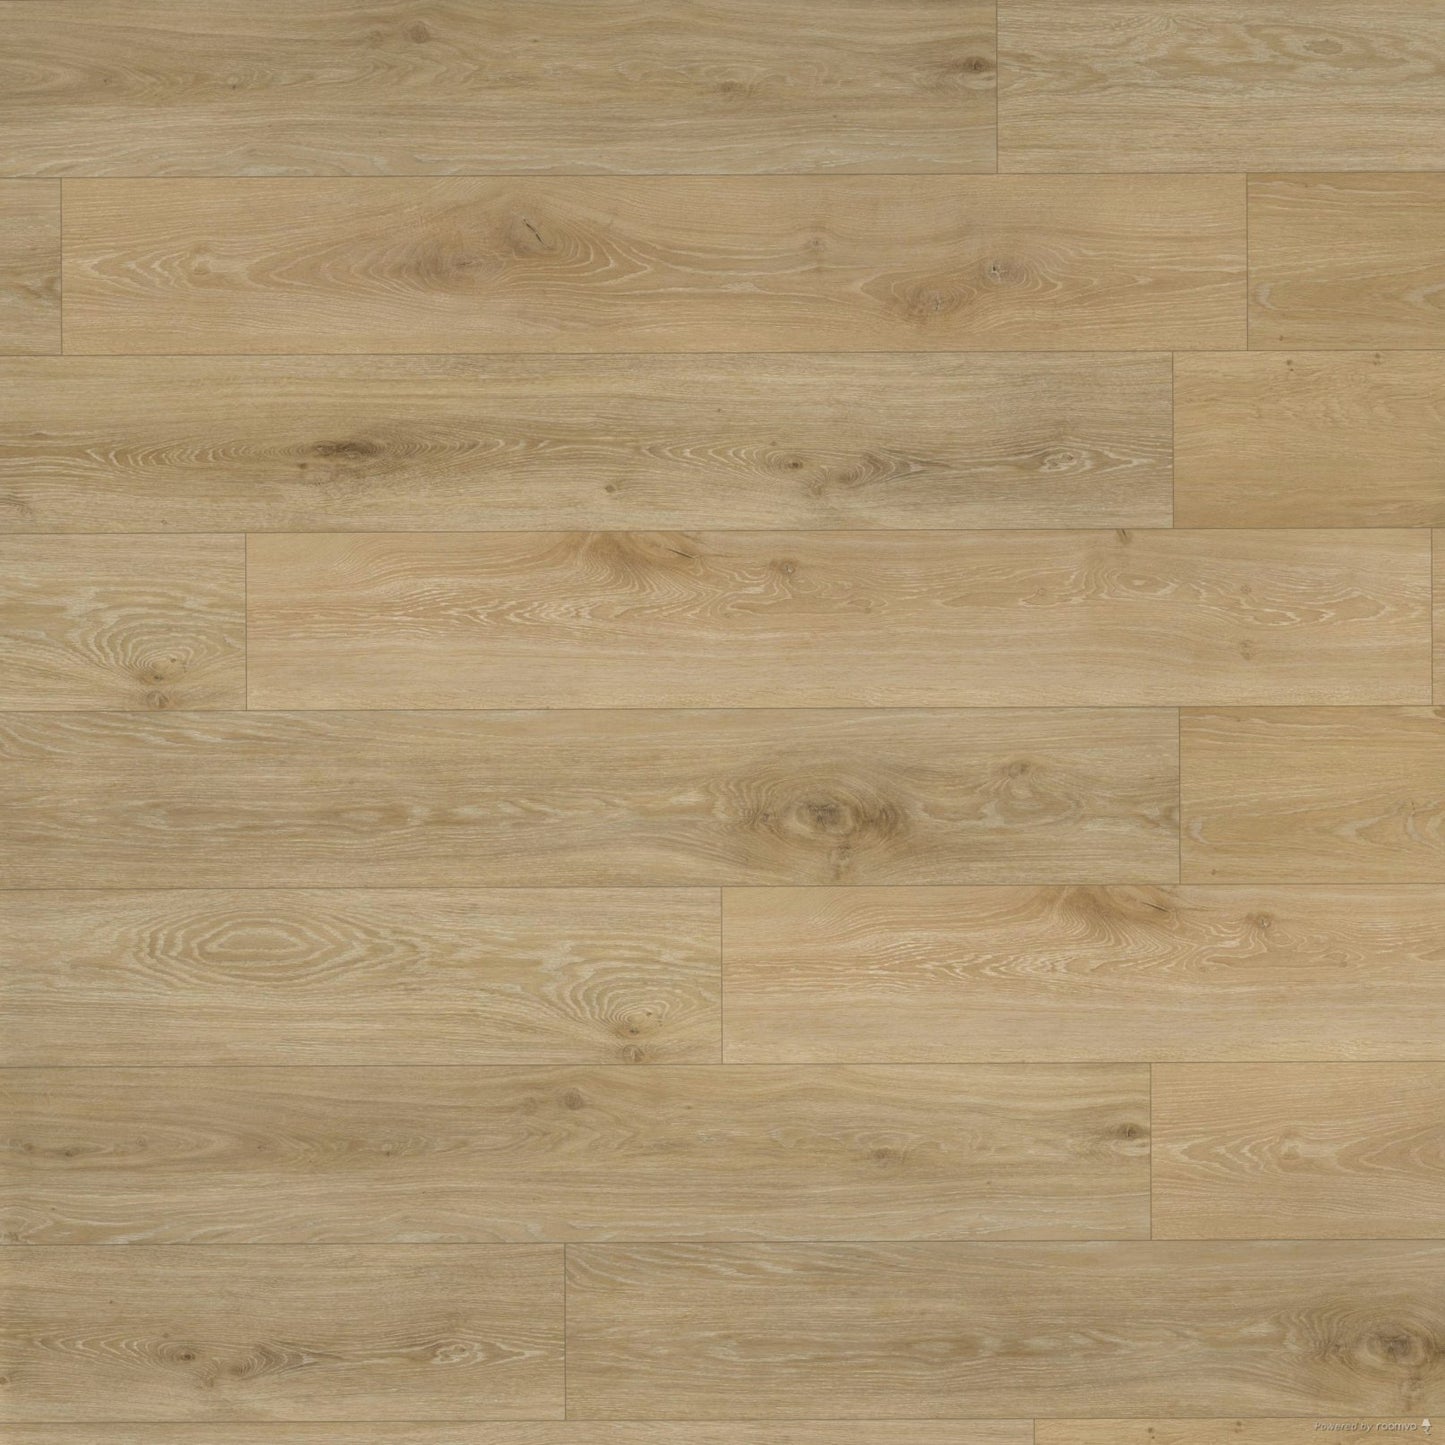 Premium Kerf Hewn Stoneform luxury flooring plank swatch